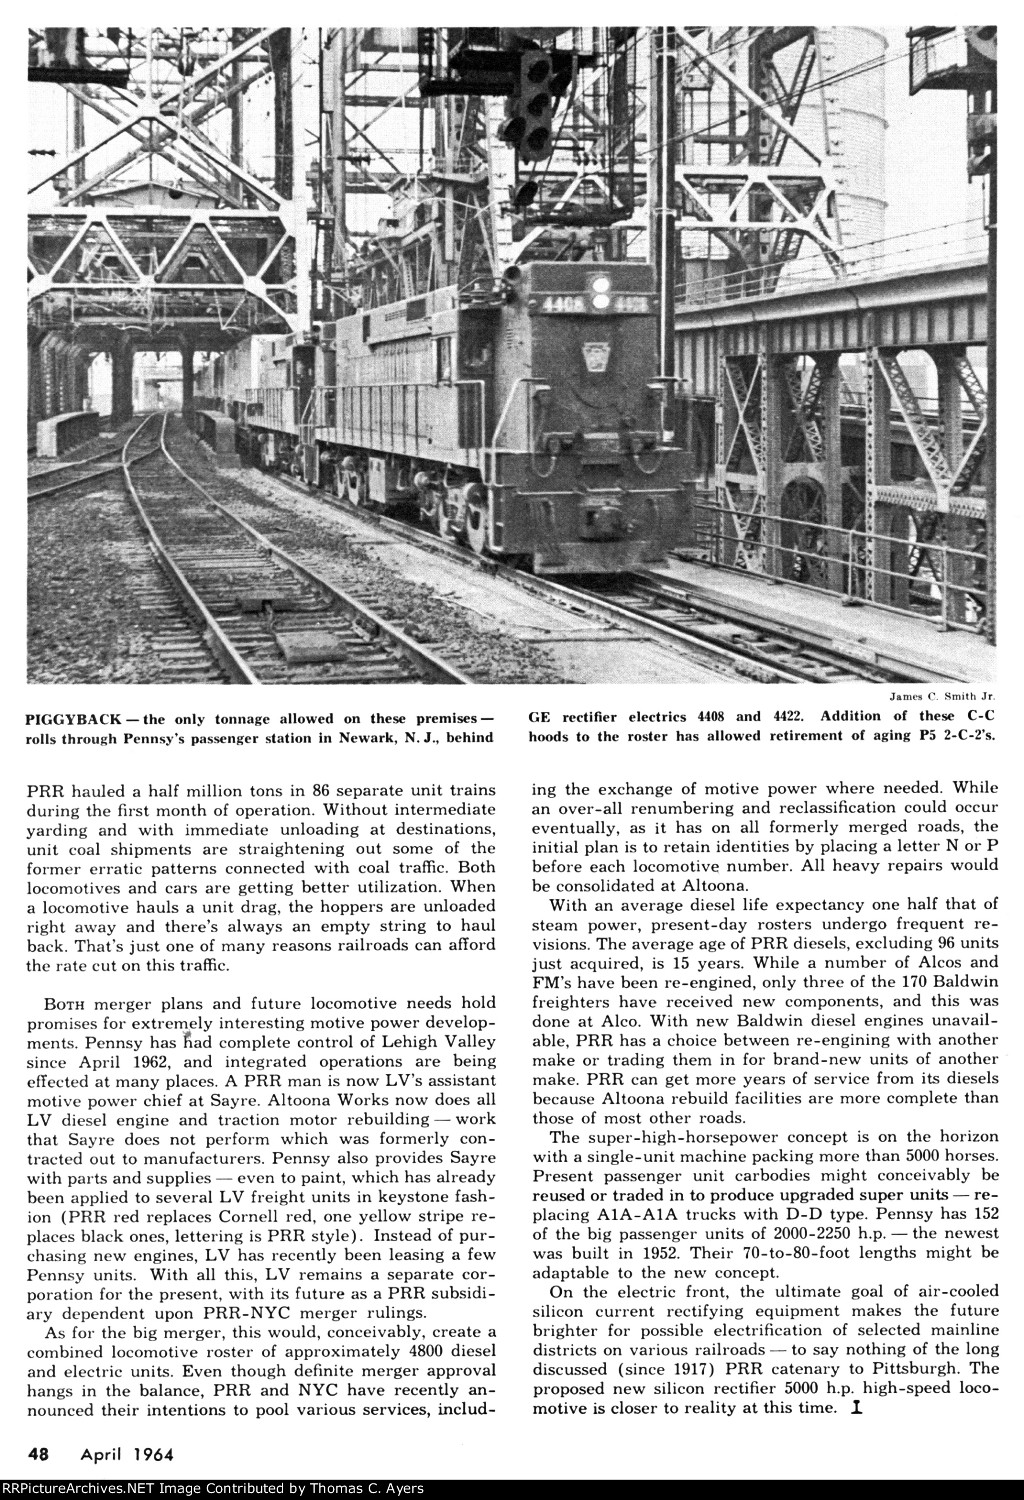 "Largest Locomotive Fleet," Page 48, 1964